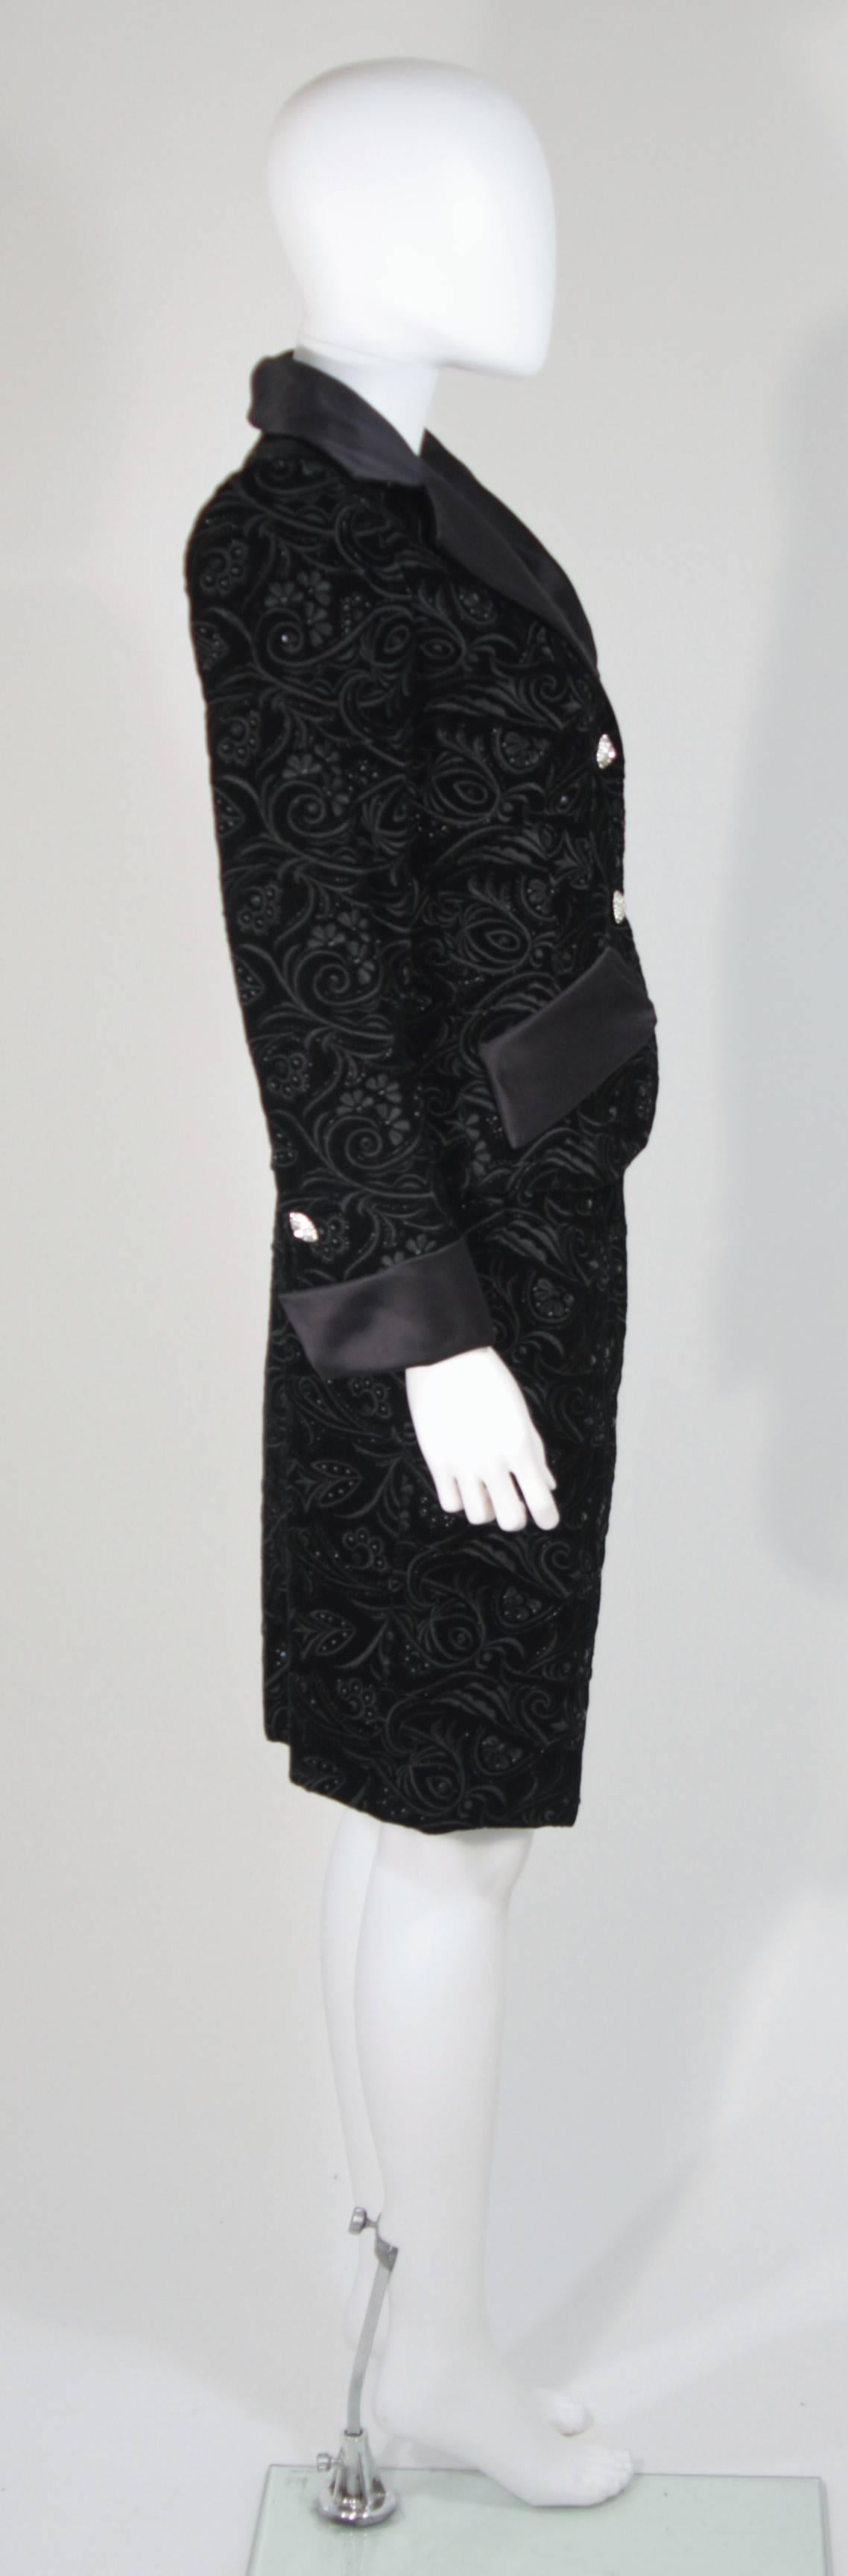 GIVENCHY COUTURE 1980s Black Velvet Floral Embroidered Embellished Suit Size 4-6 1